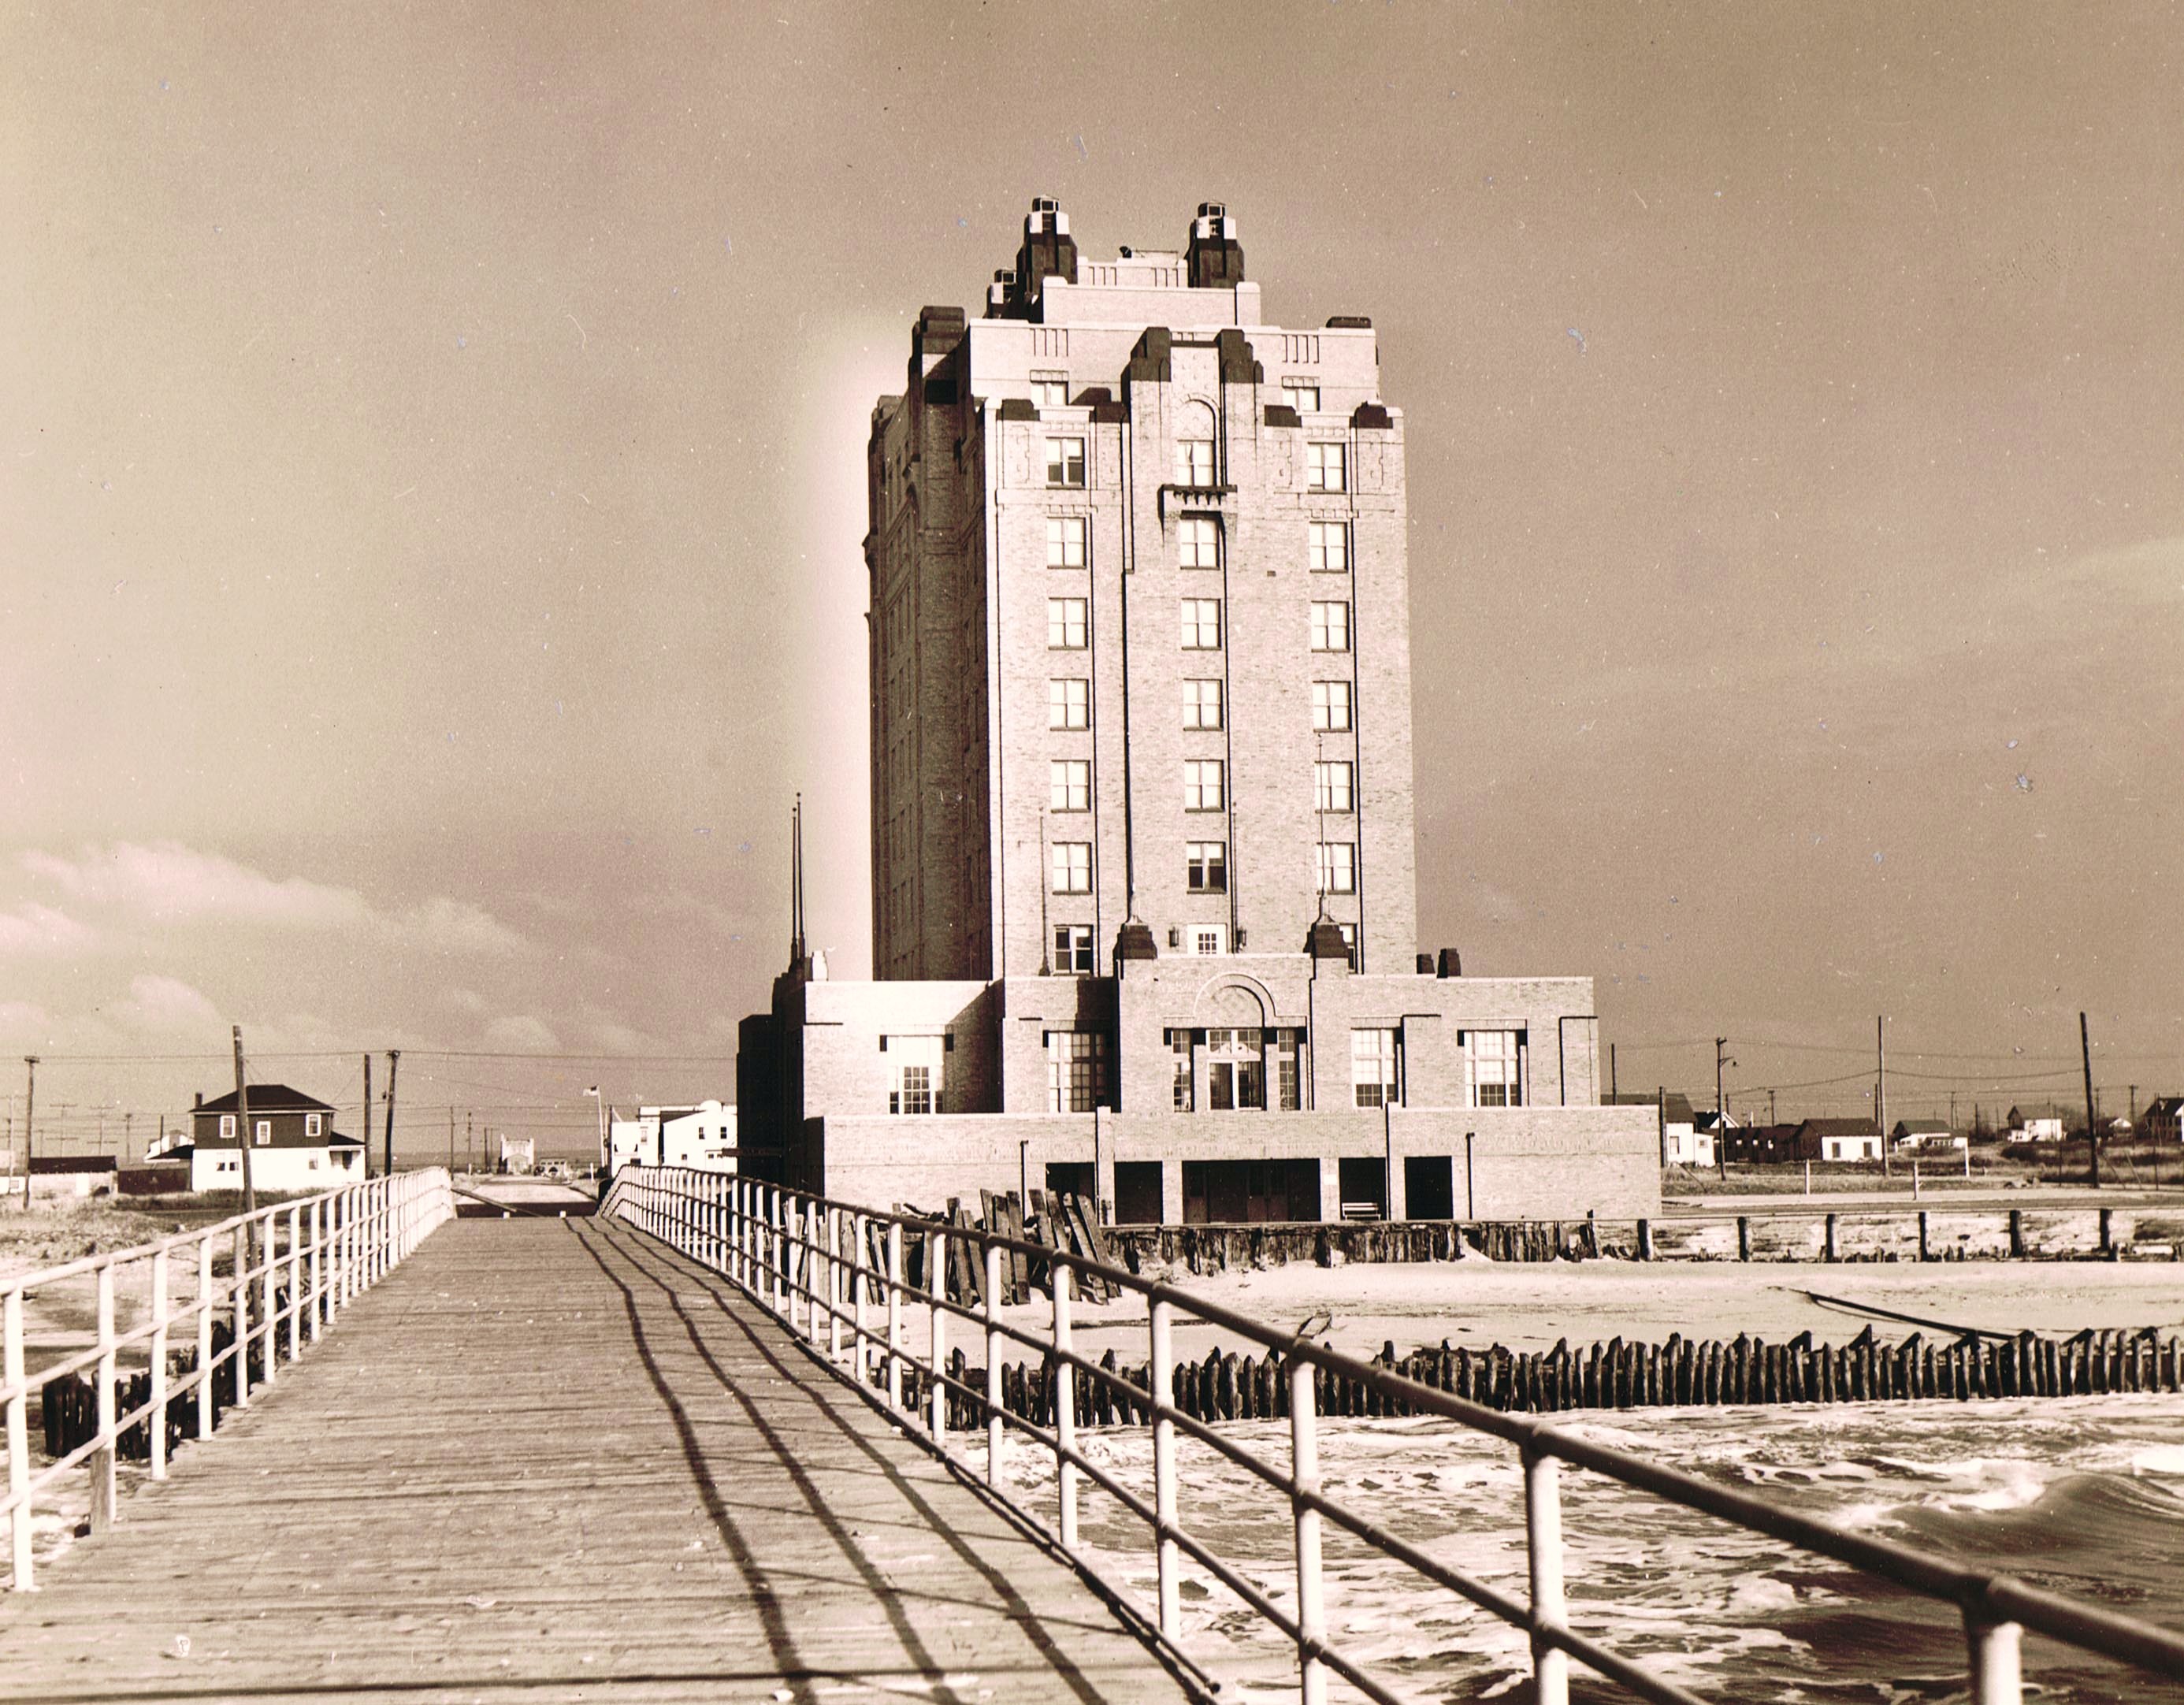 The Brigantine Hoteltaken fron the Boardwalk leading to the Pier building, 1930s